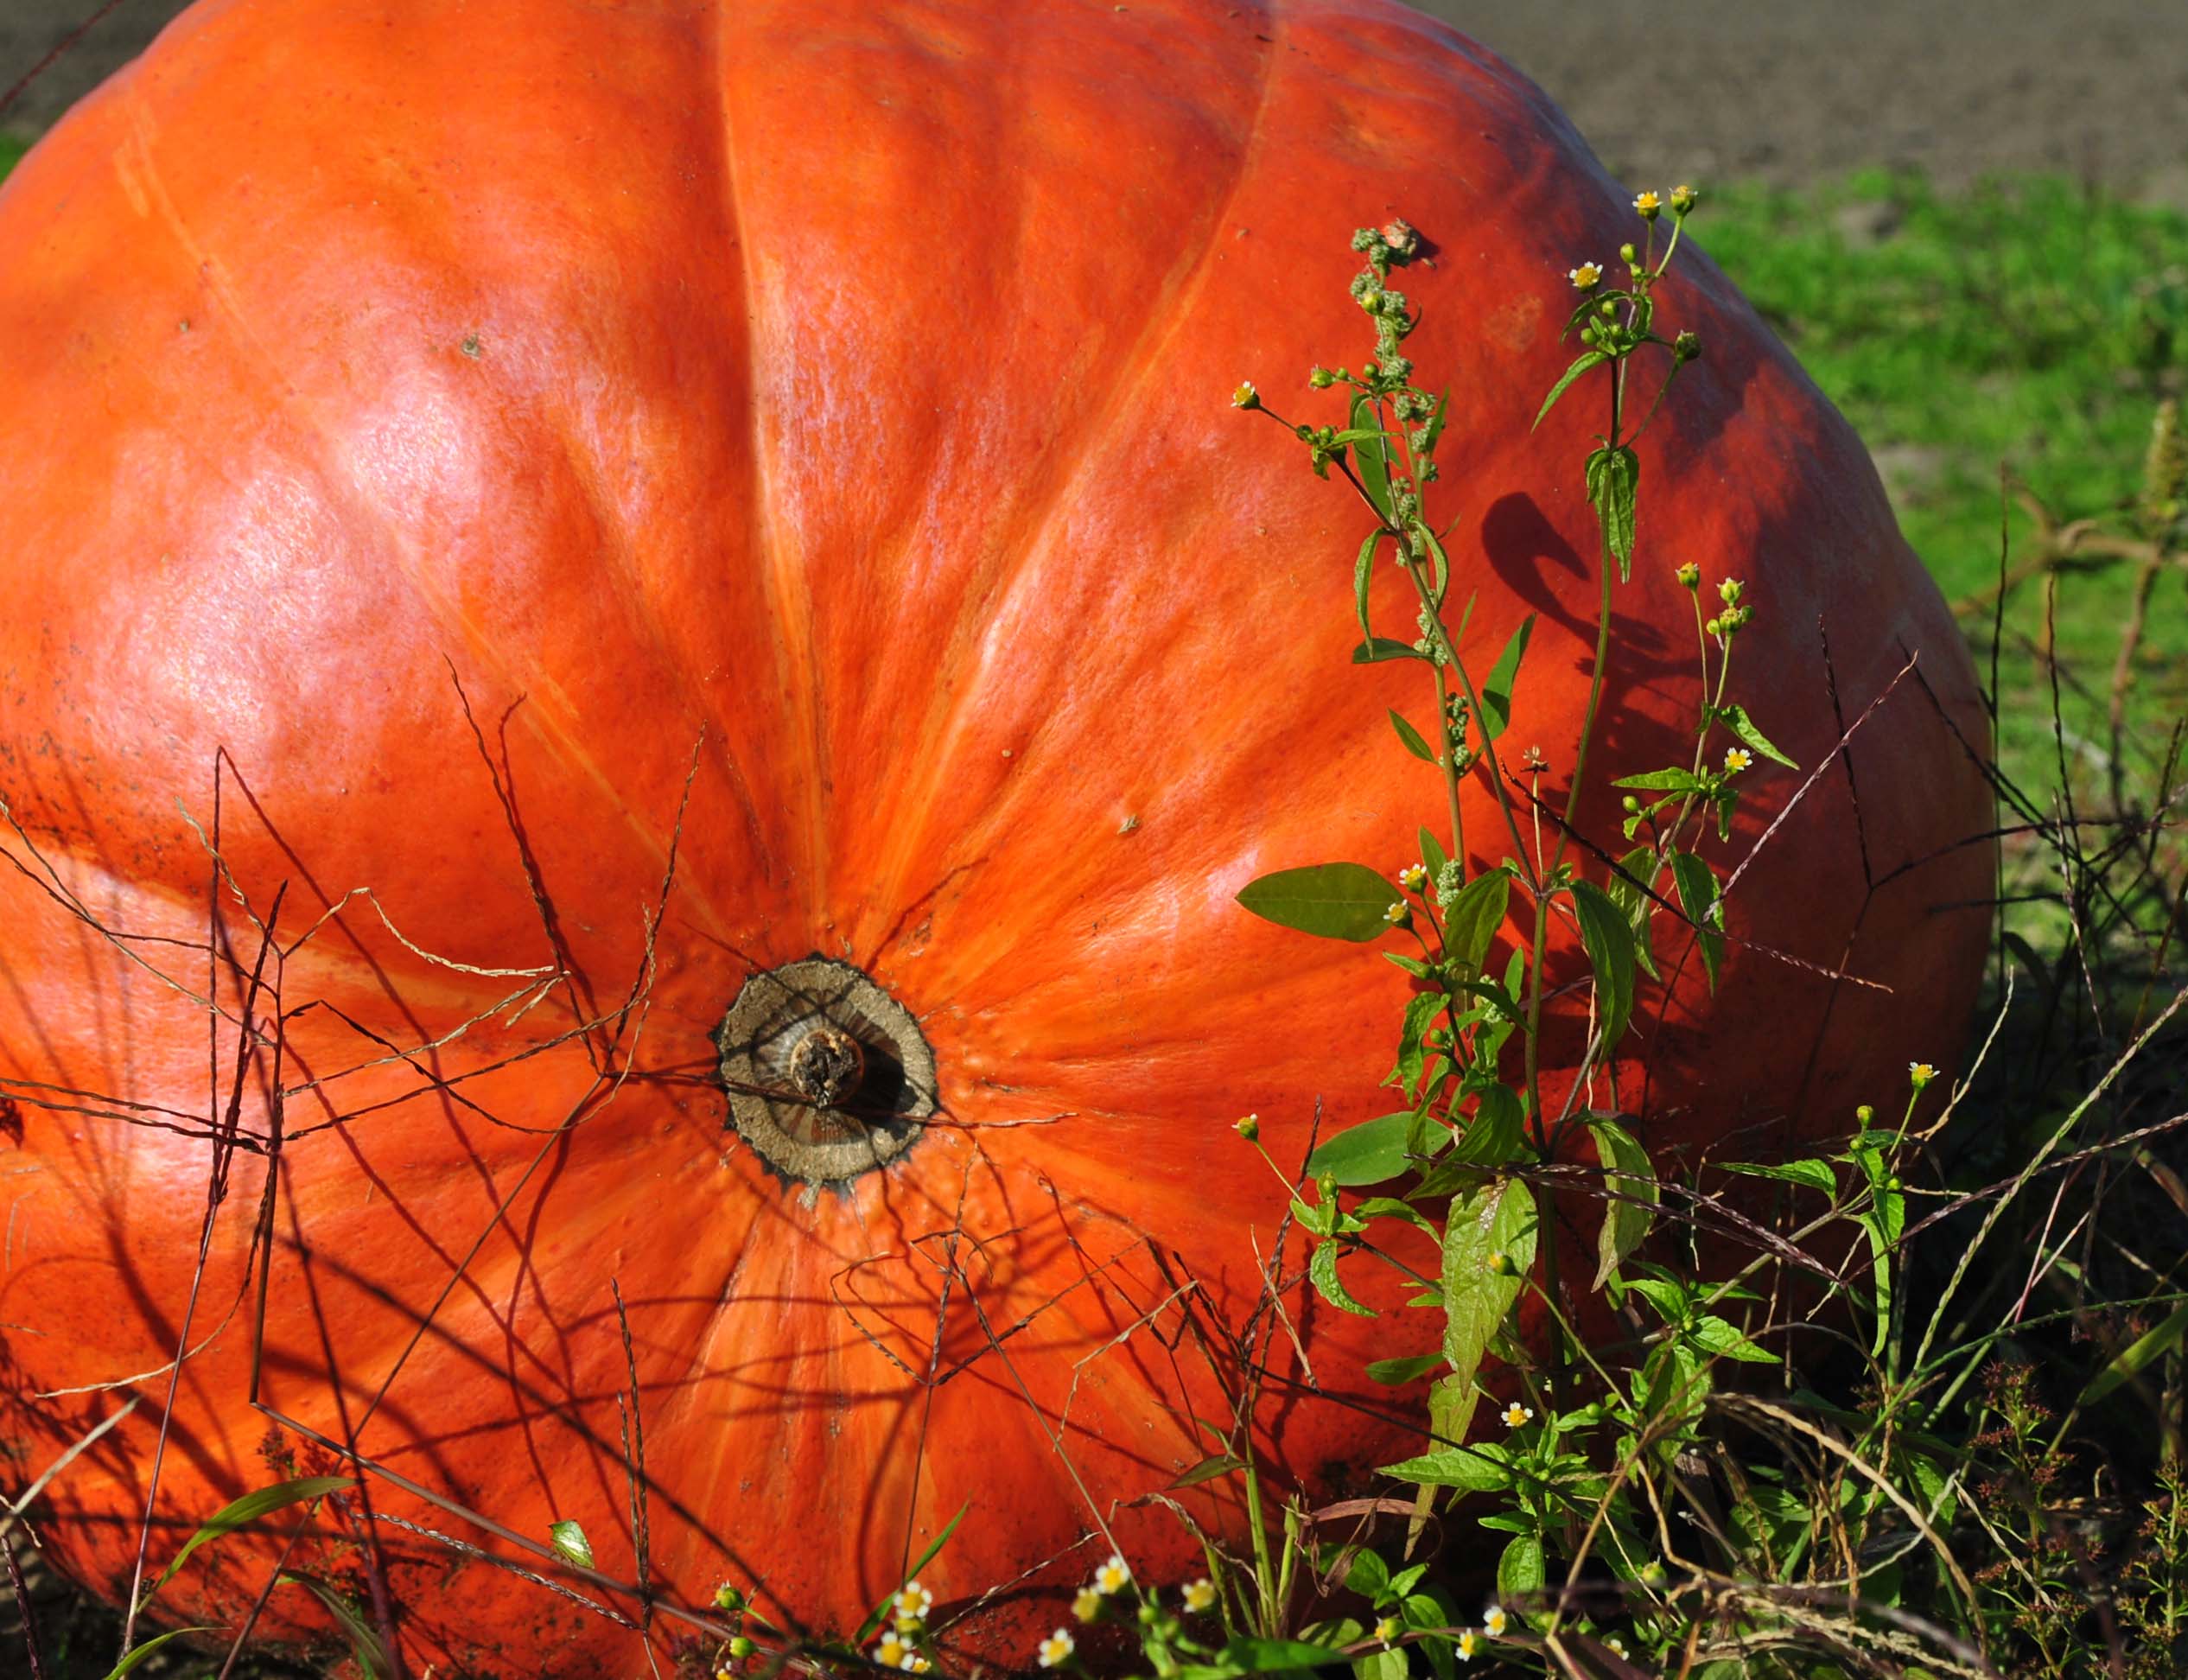 photo of a large, orange pumpkin on its side to help illustrate pumpkin aphrodisiac